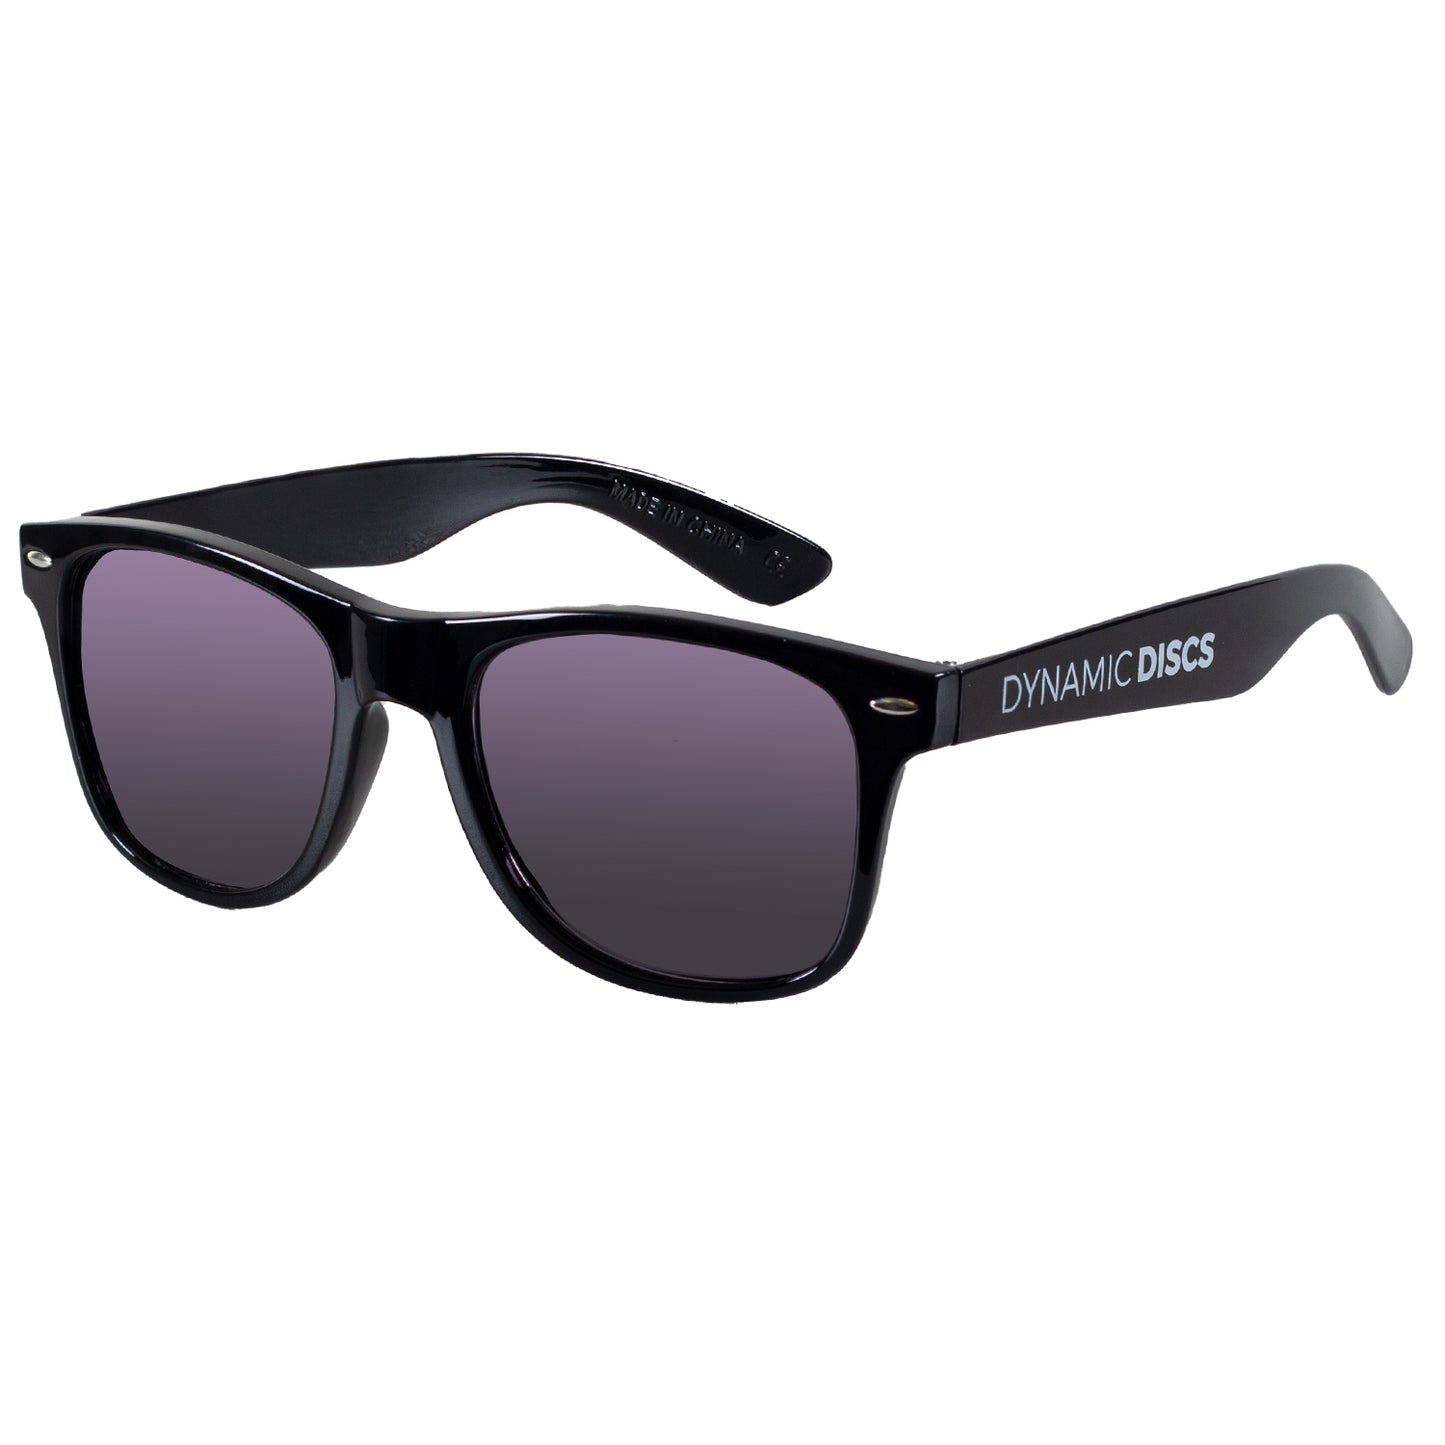 Dynamic Discs Gloss Black Sunglasses